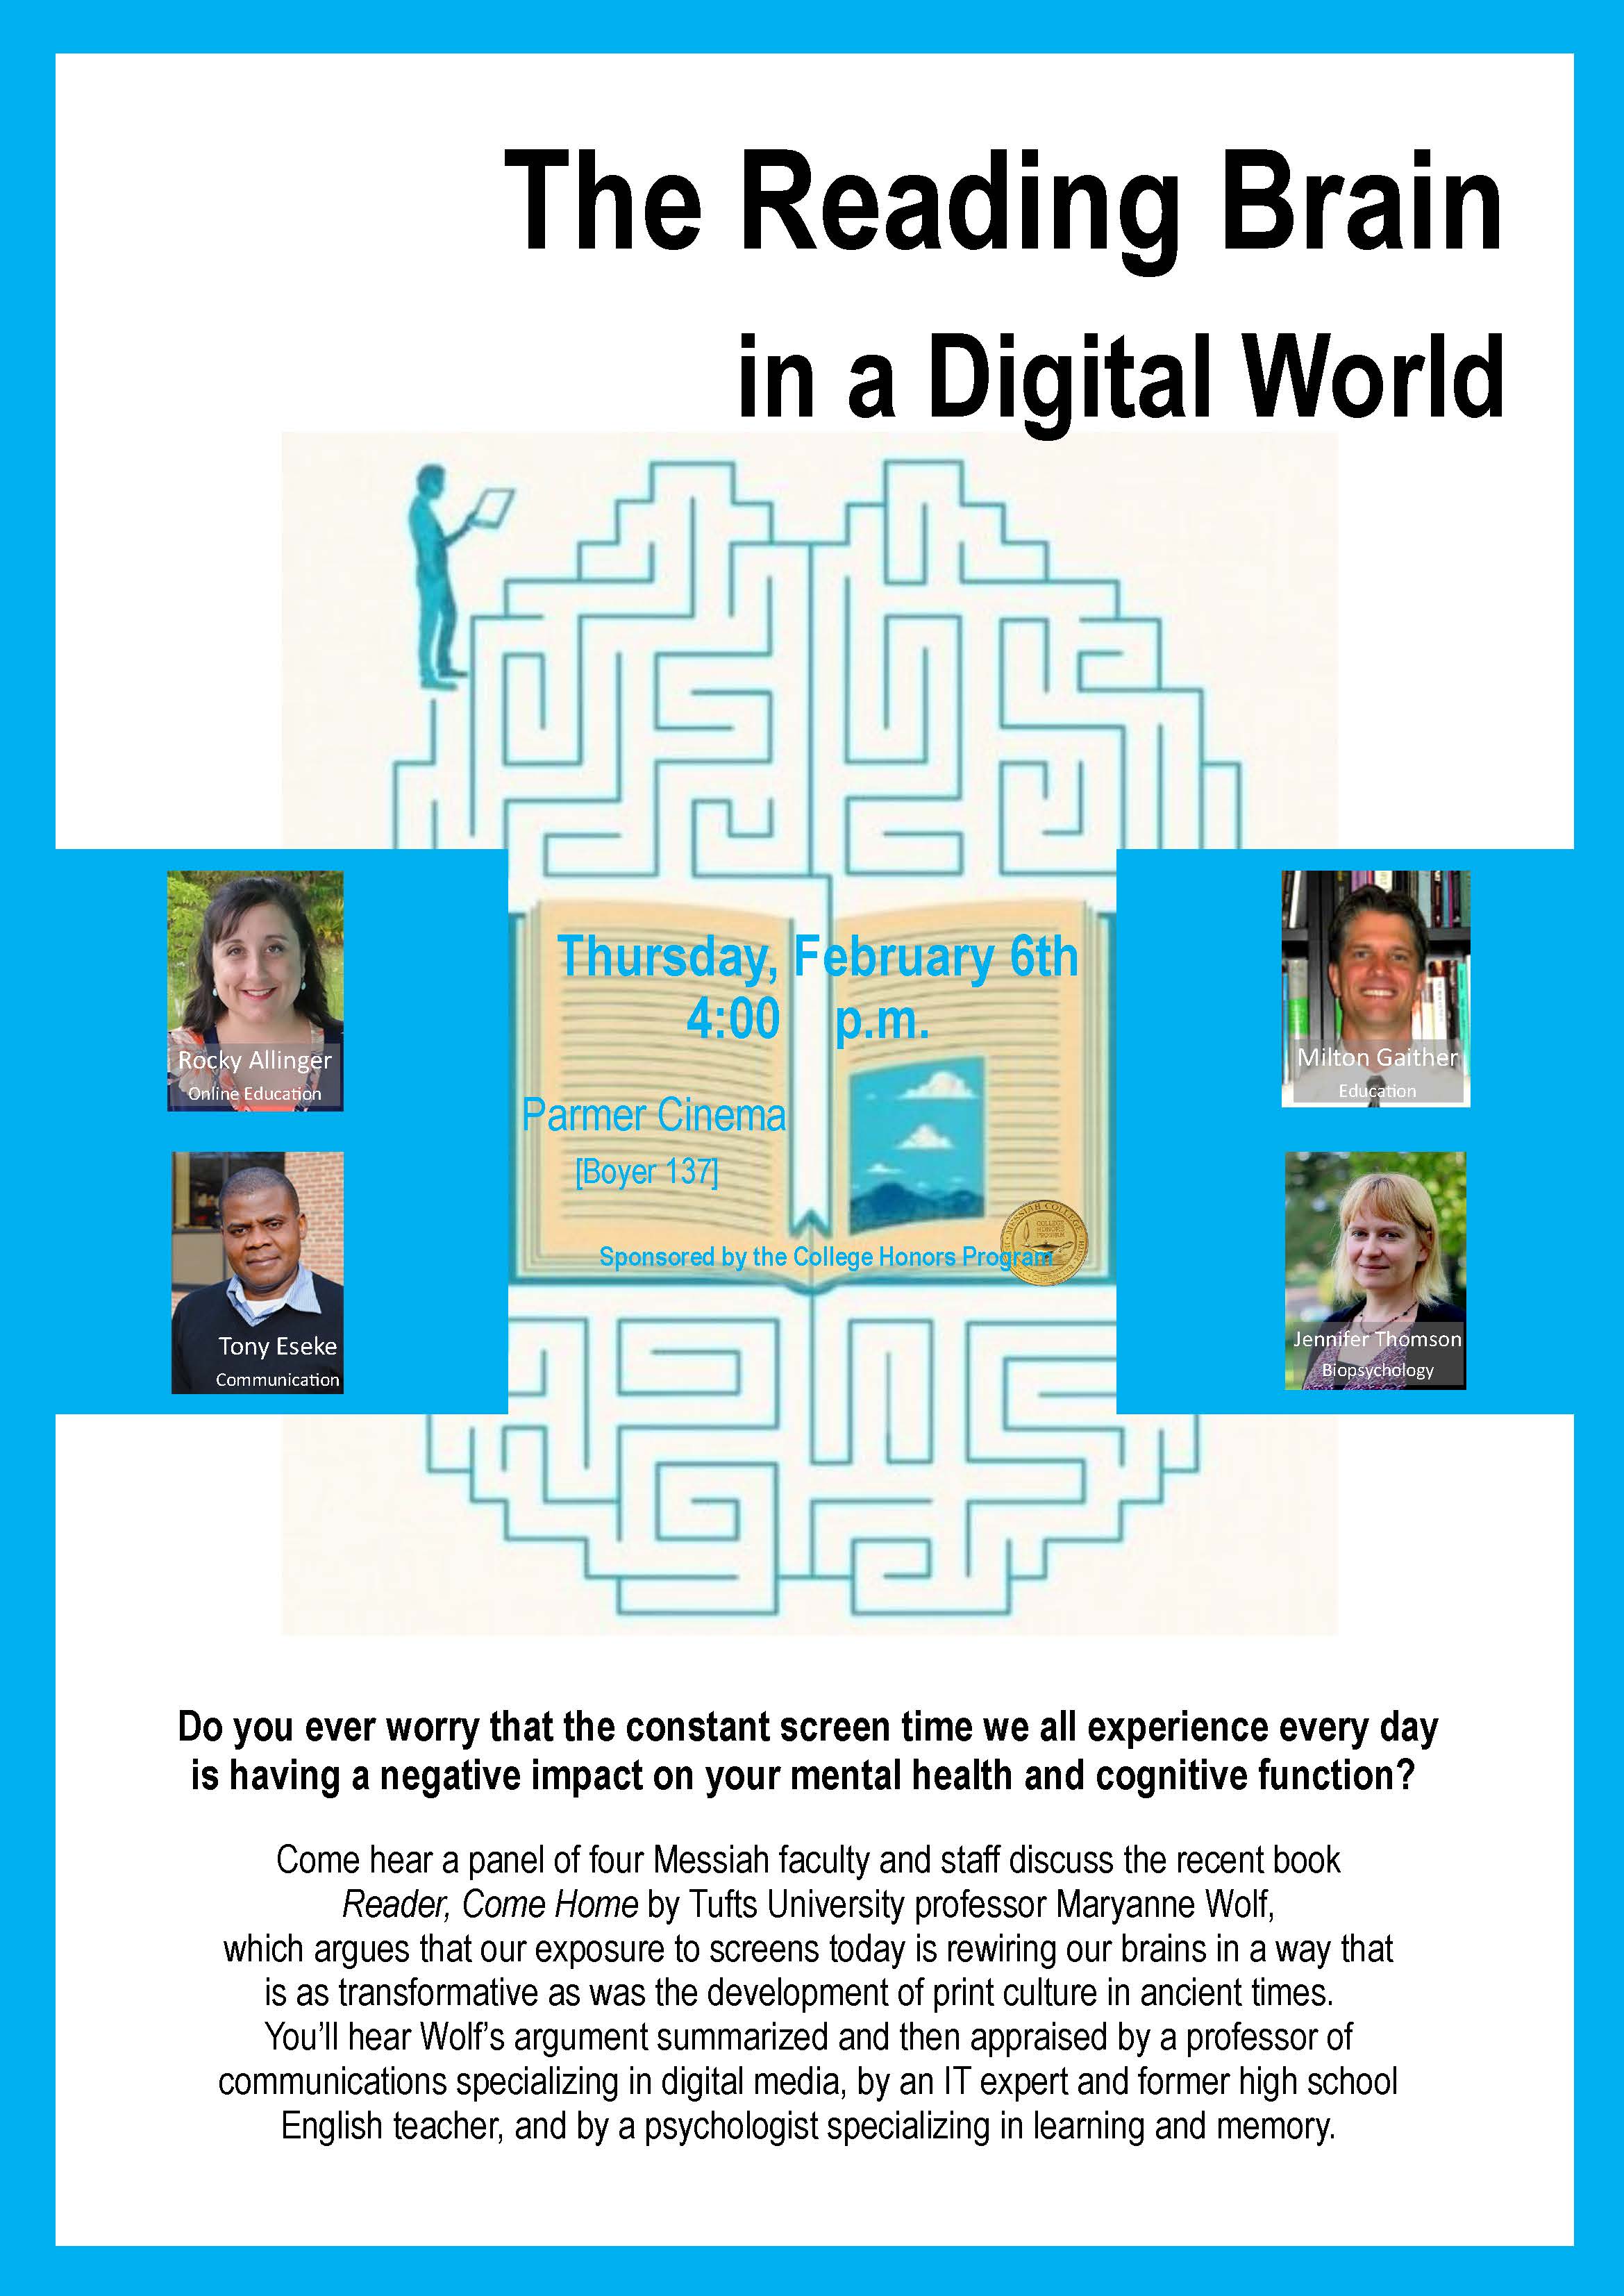 "The Reading Brain in a Digital World"